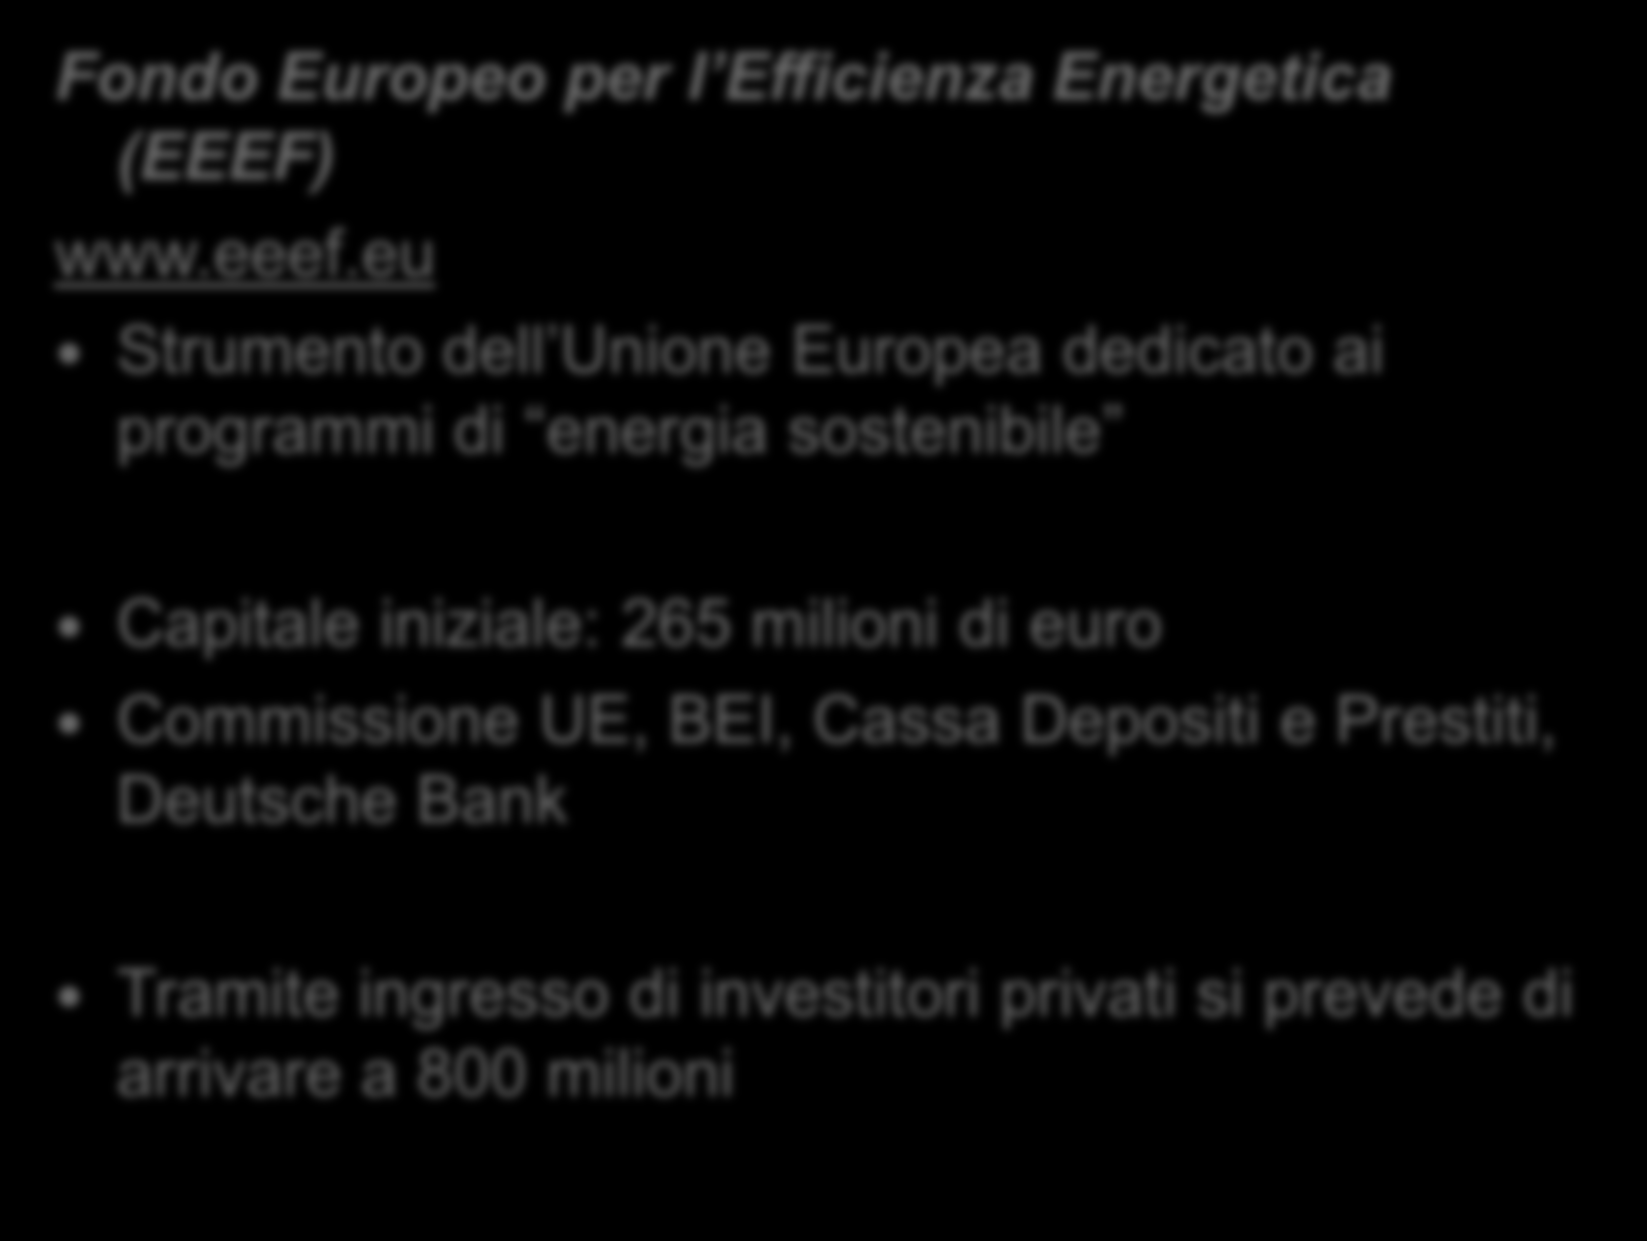 Iniziative europee: EEEF Fondo Europeo per l Efficienza Energetica (EEEF) www.eeef.